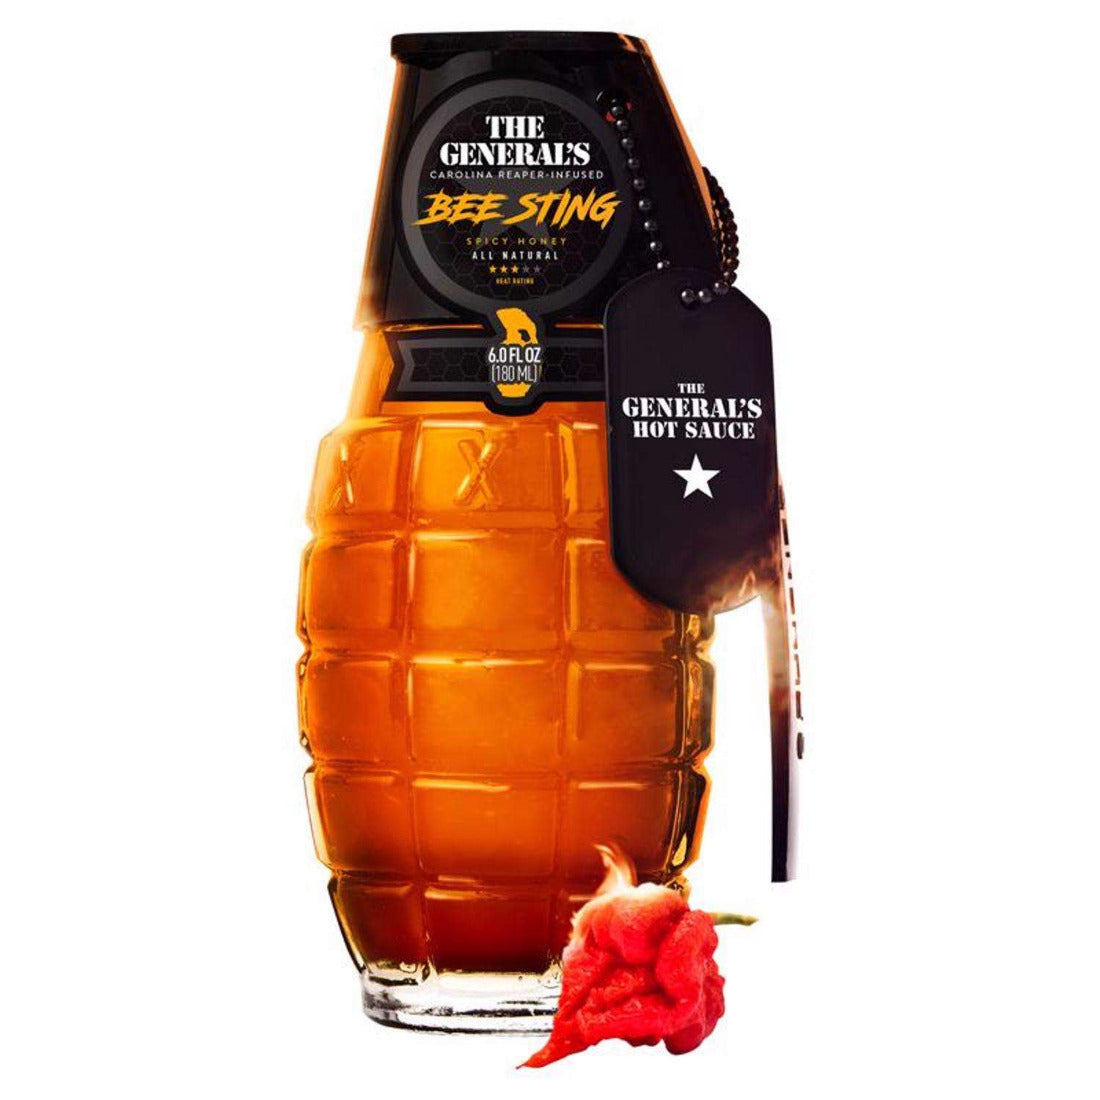 The Generals Grenade - Bee Sting Carolina Reaper Infused Honey 180ml (6oz)